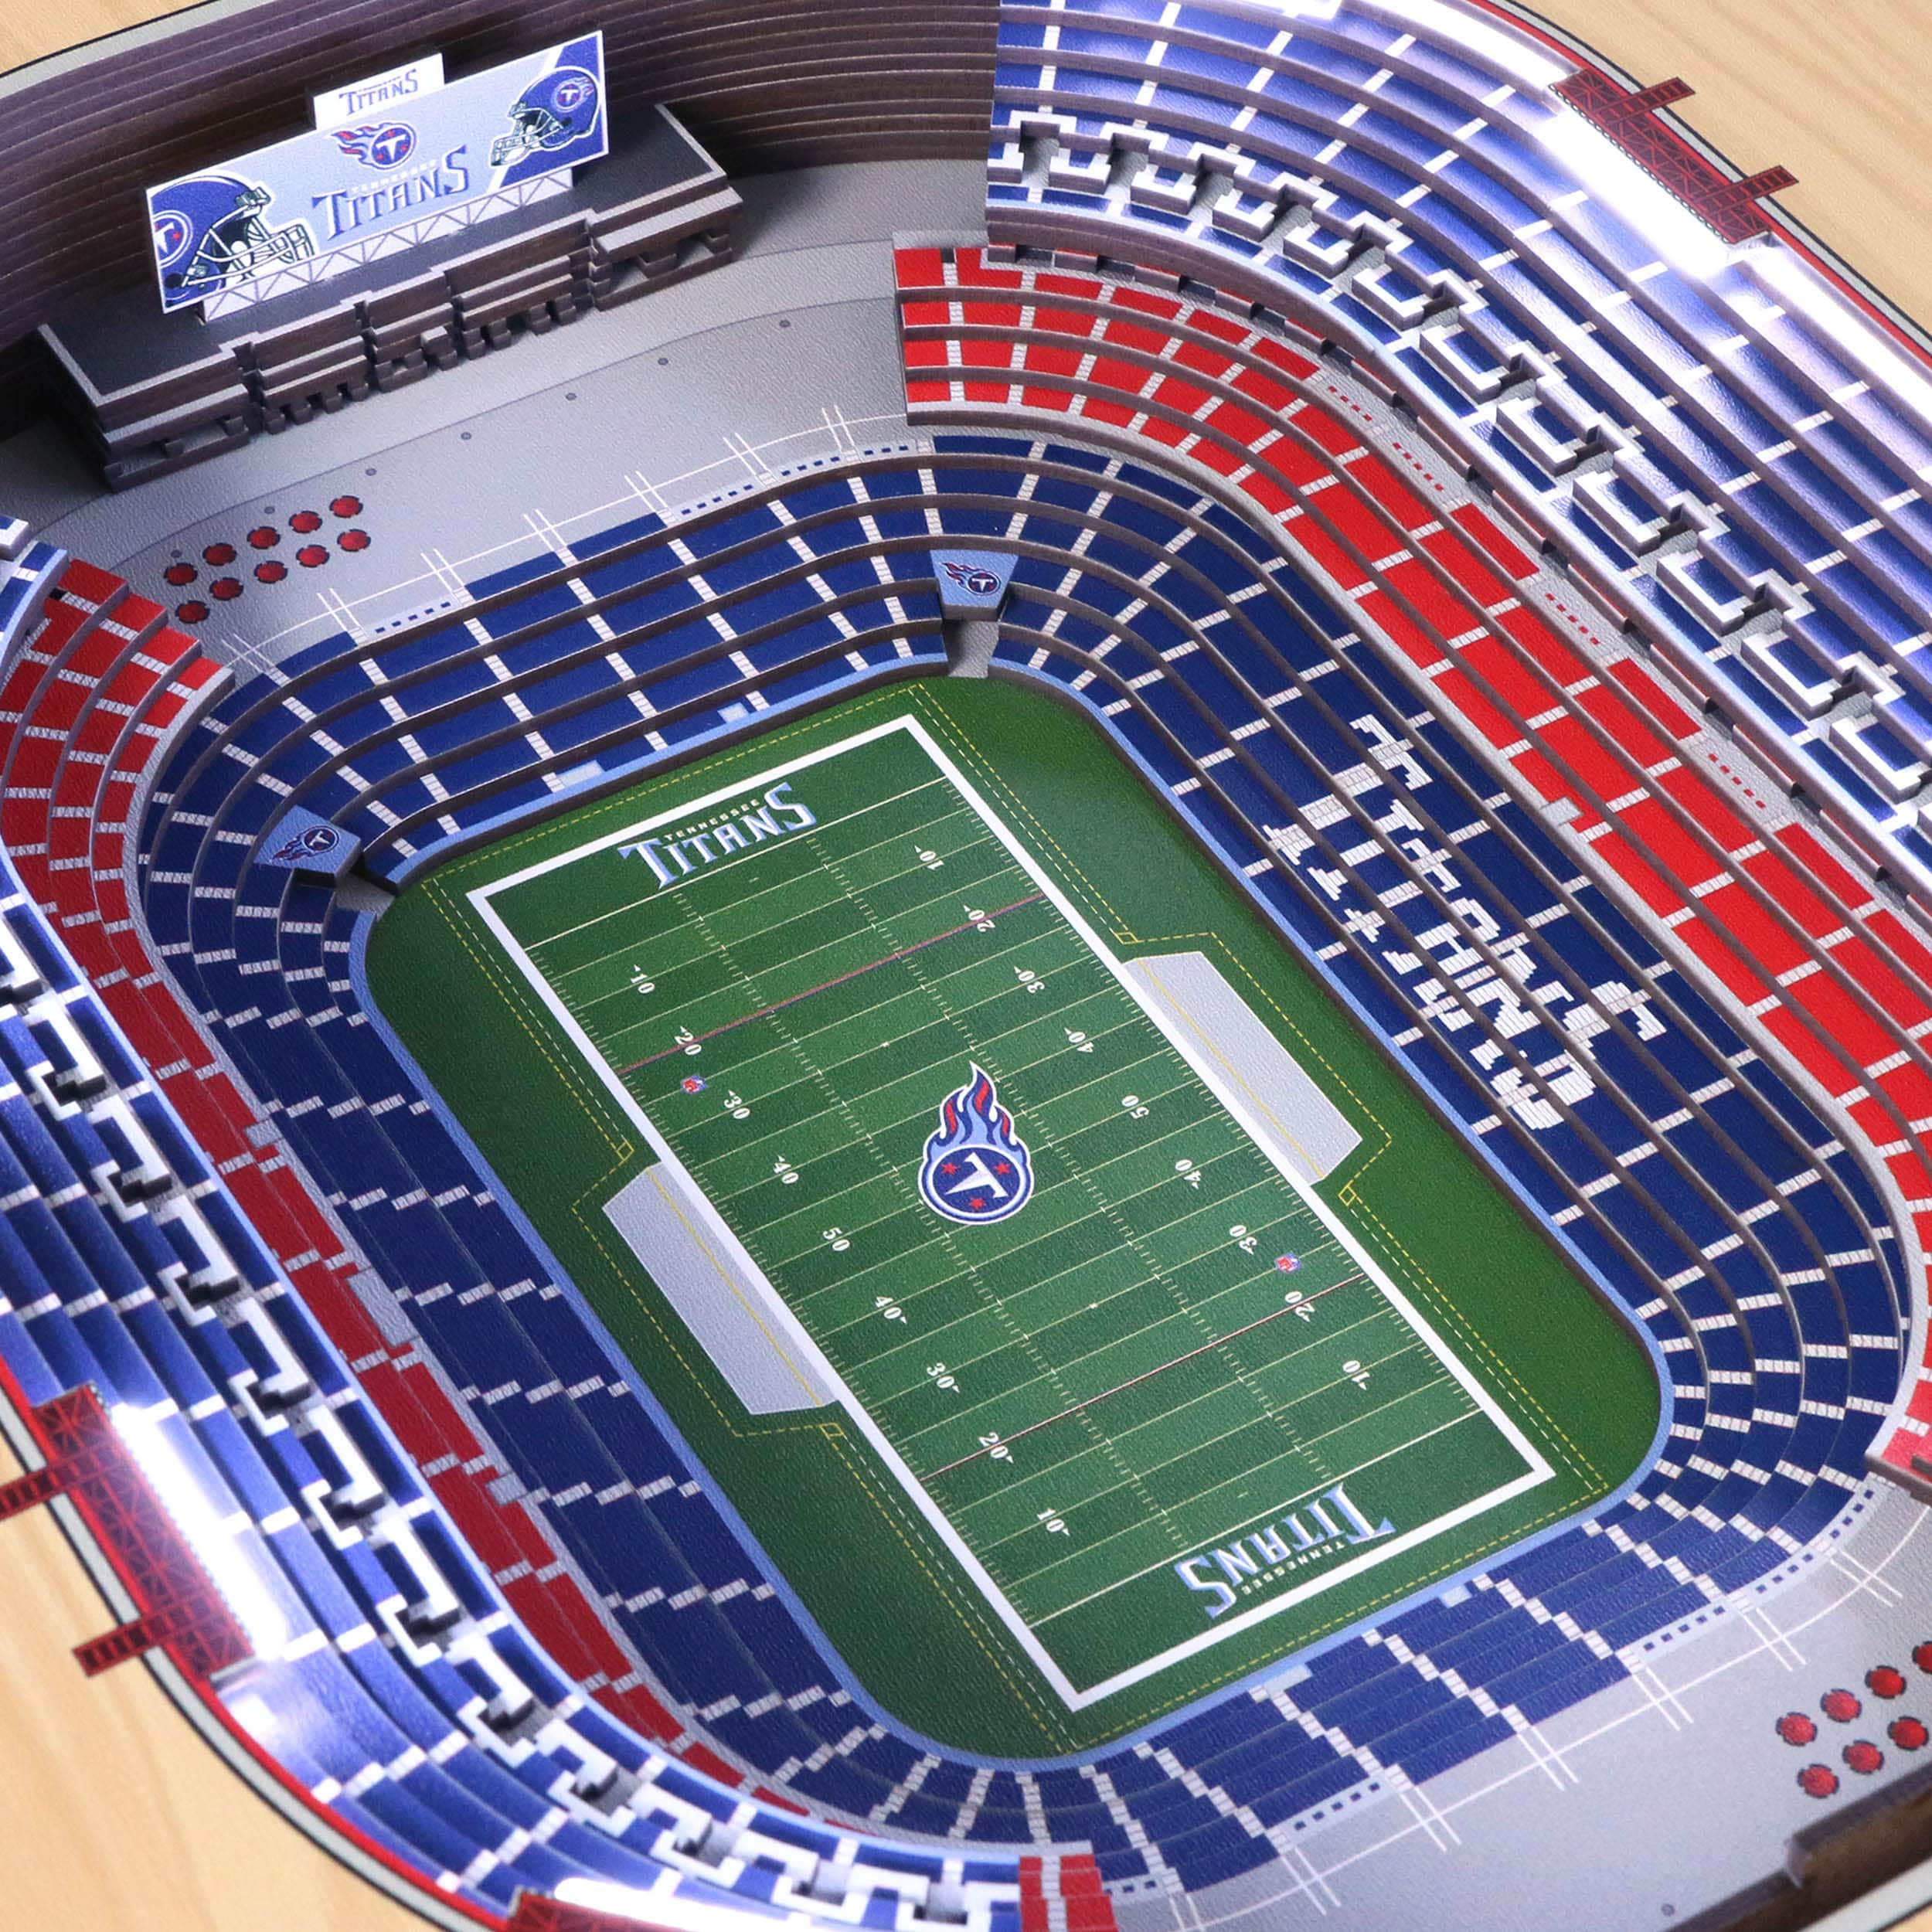 Tennessee Titans, 3D Stadium View, Tennessee Titans, Wall Art